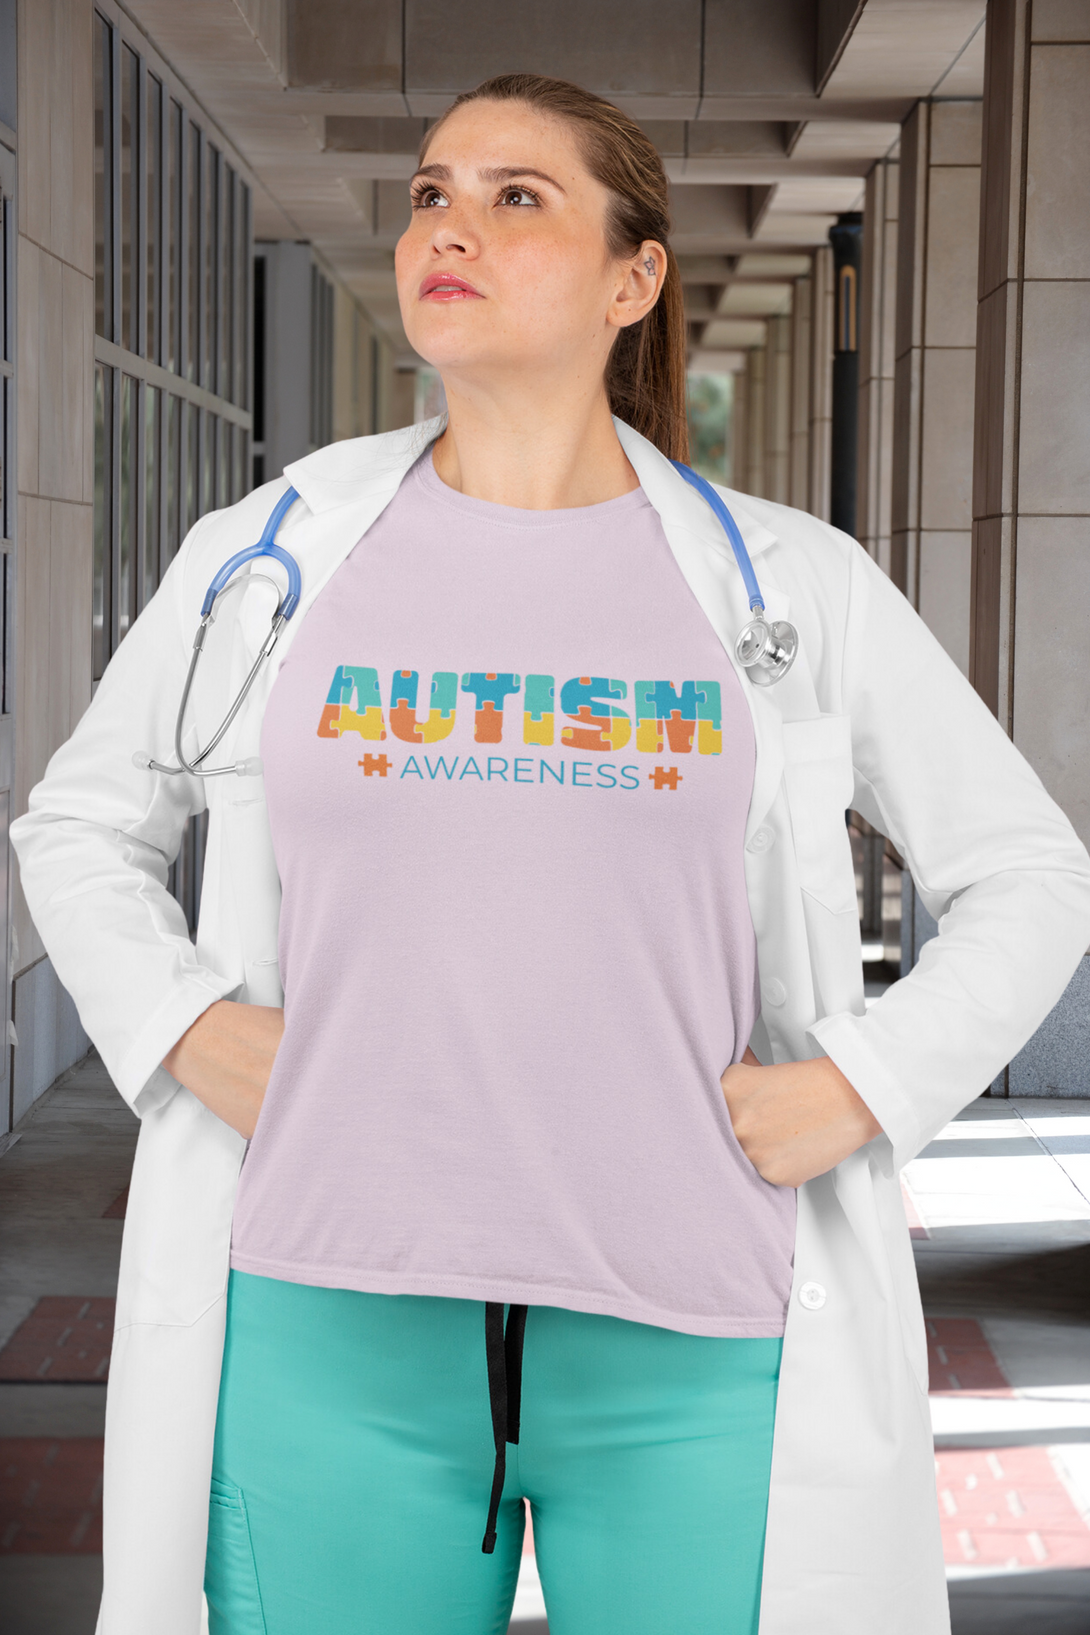 Autism Awareness Printed T-Shirt For Women - WowWaves - 5